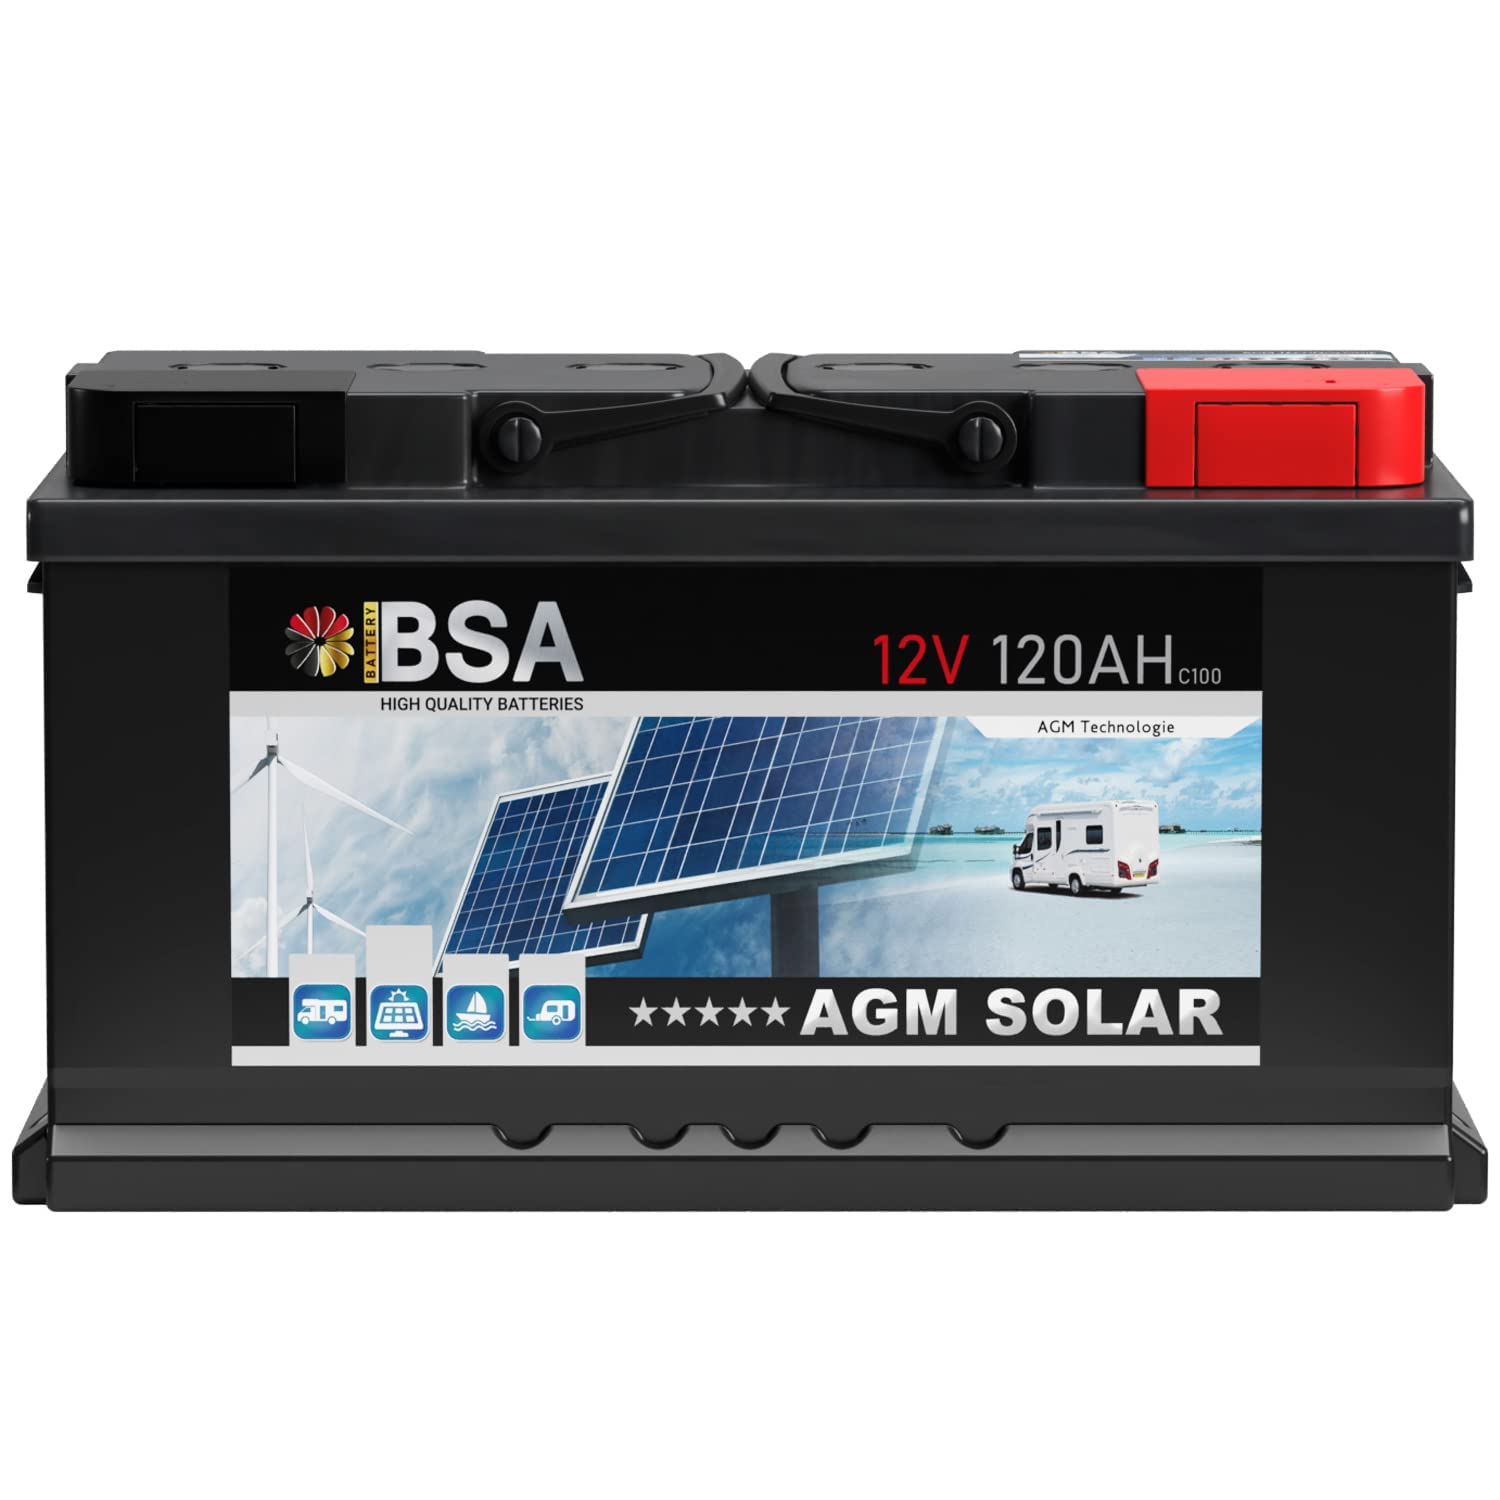 BSA AGM Batterie 120Ah 12V Solarbatterie Deep Cycle Wohnmobil Bootsbatterie zyklenfeste wartungsfreie VRLA Batterie ersetzt 100Ah 110Ah